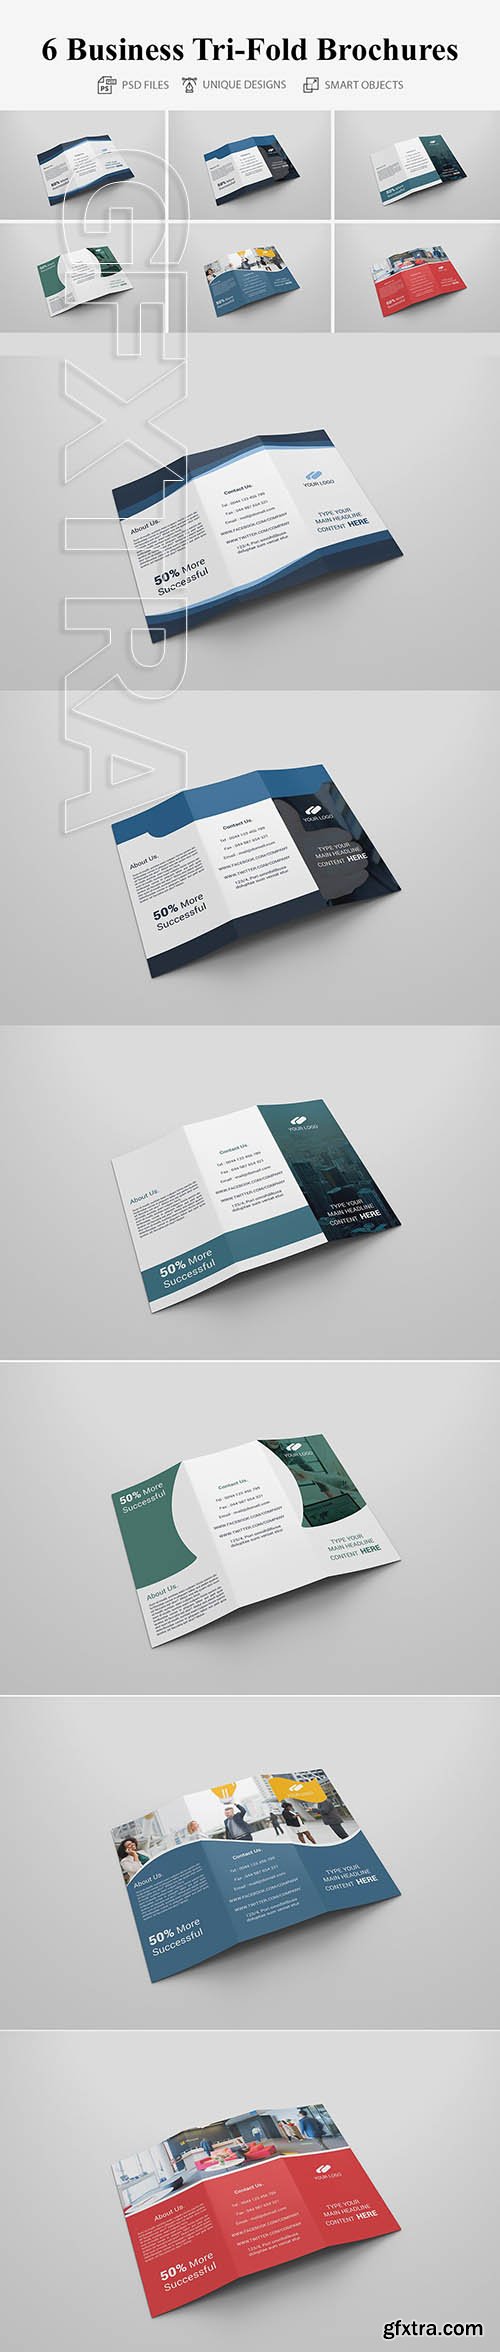 CreativeMarket - 6 Business Tri-fold Brochures 4160628